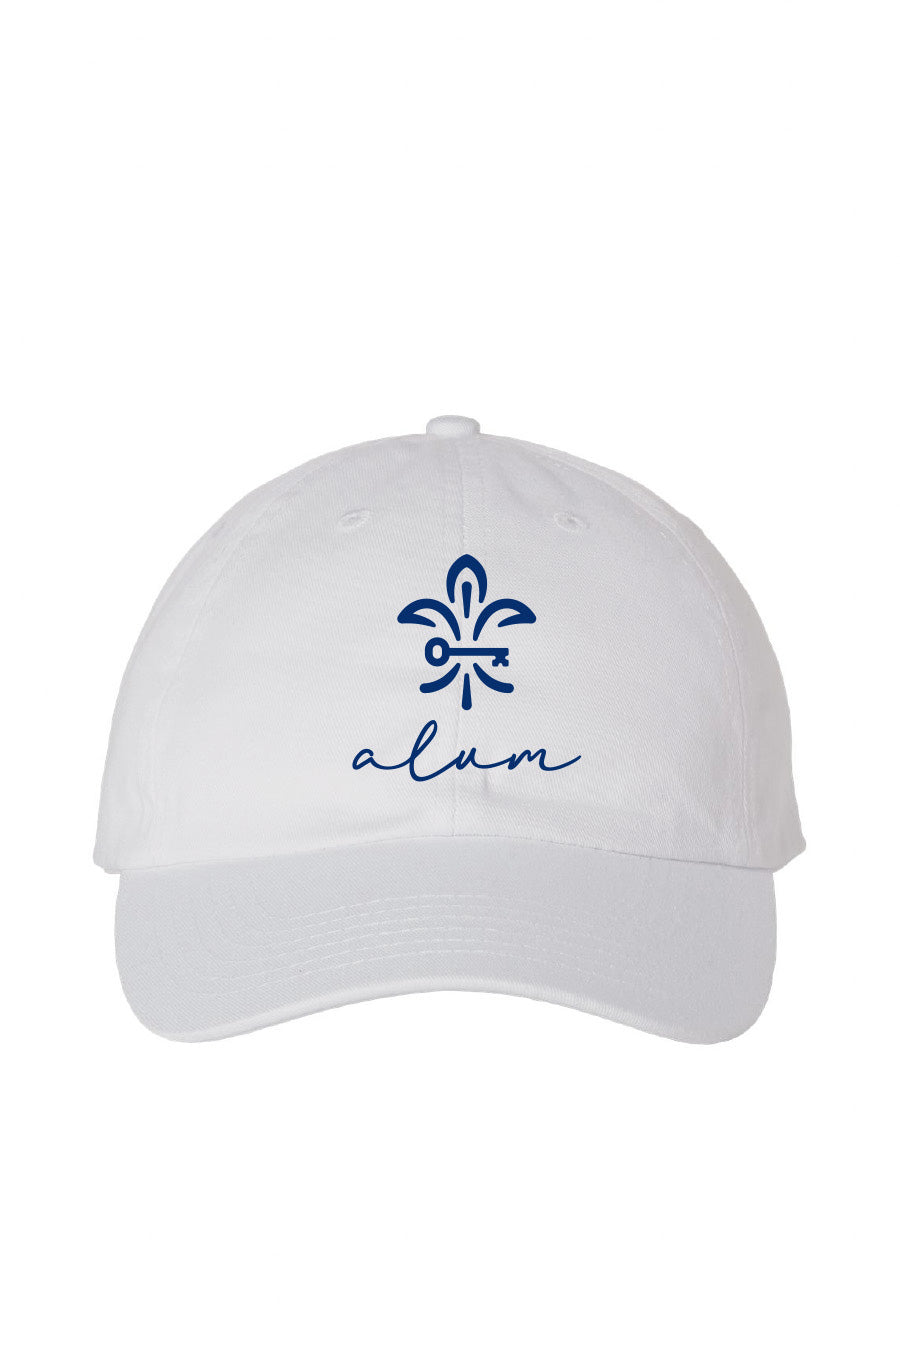 Alumna Fleur-de-Lis Hat